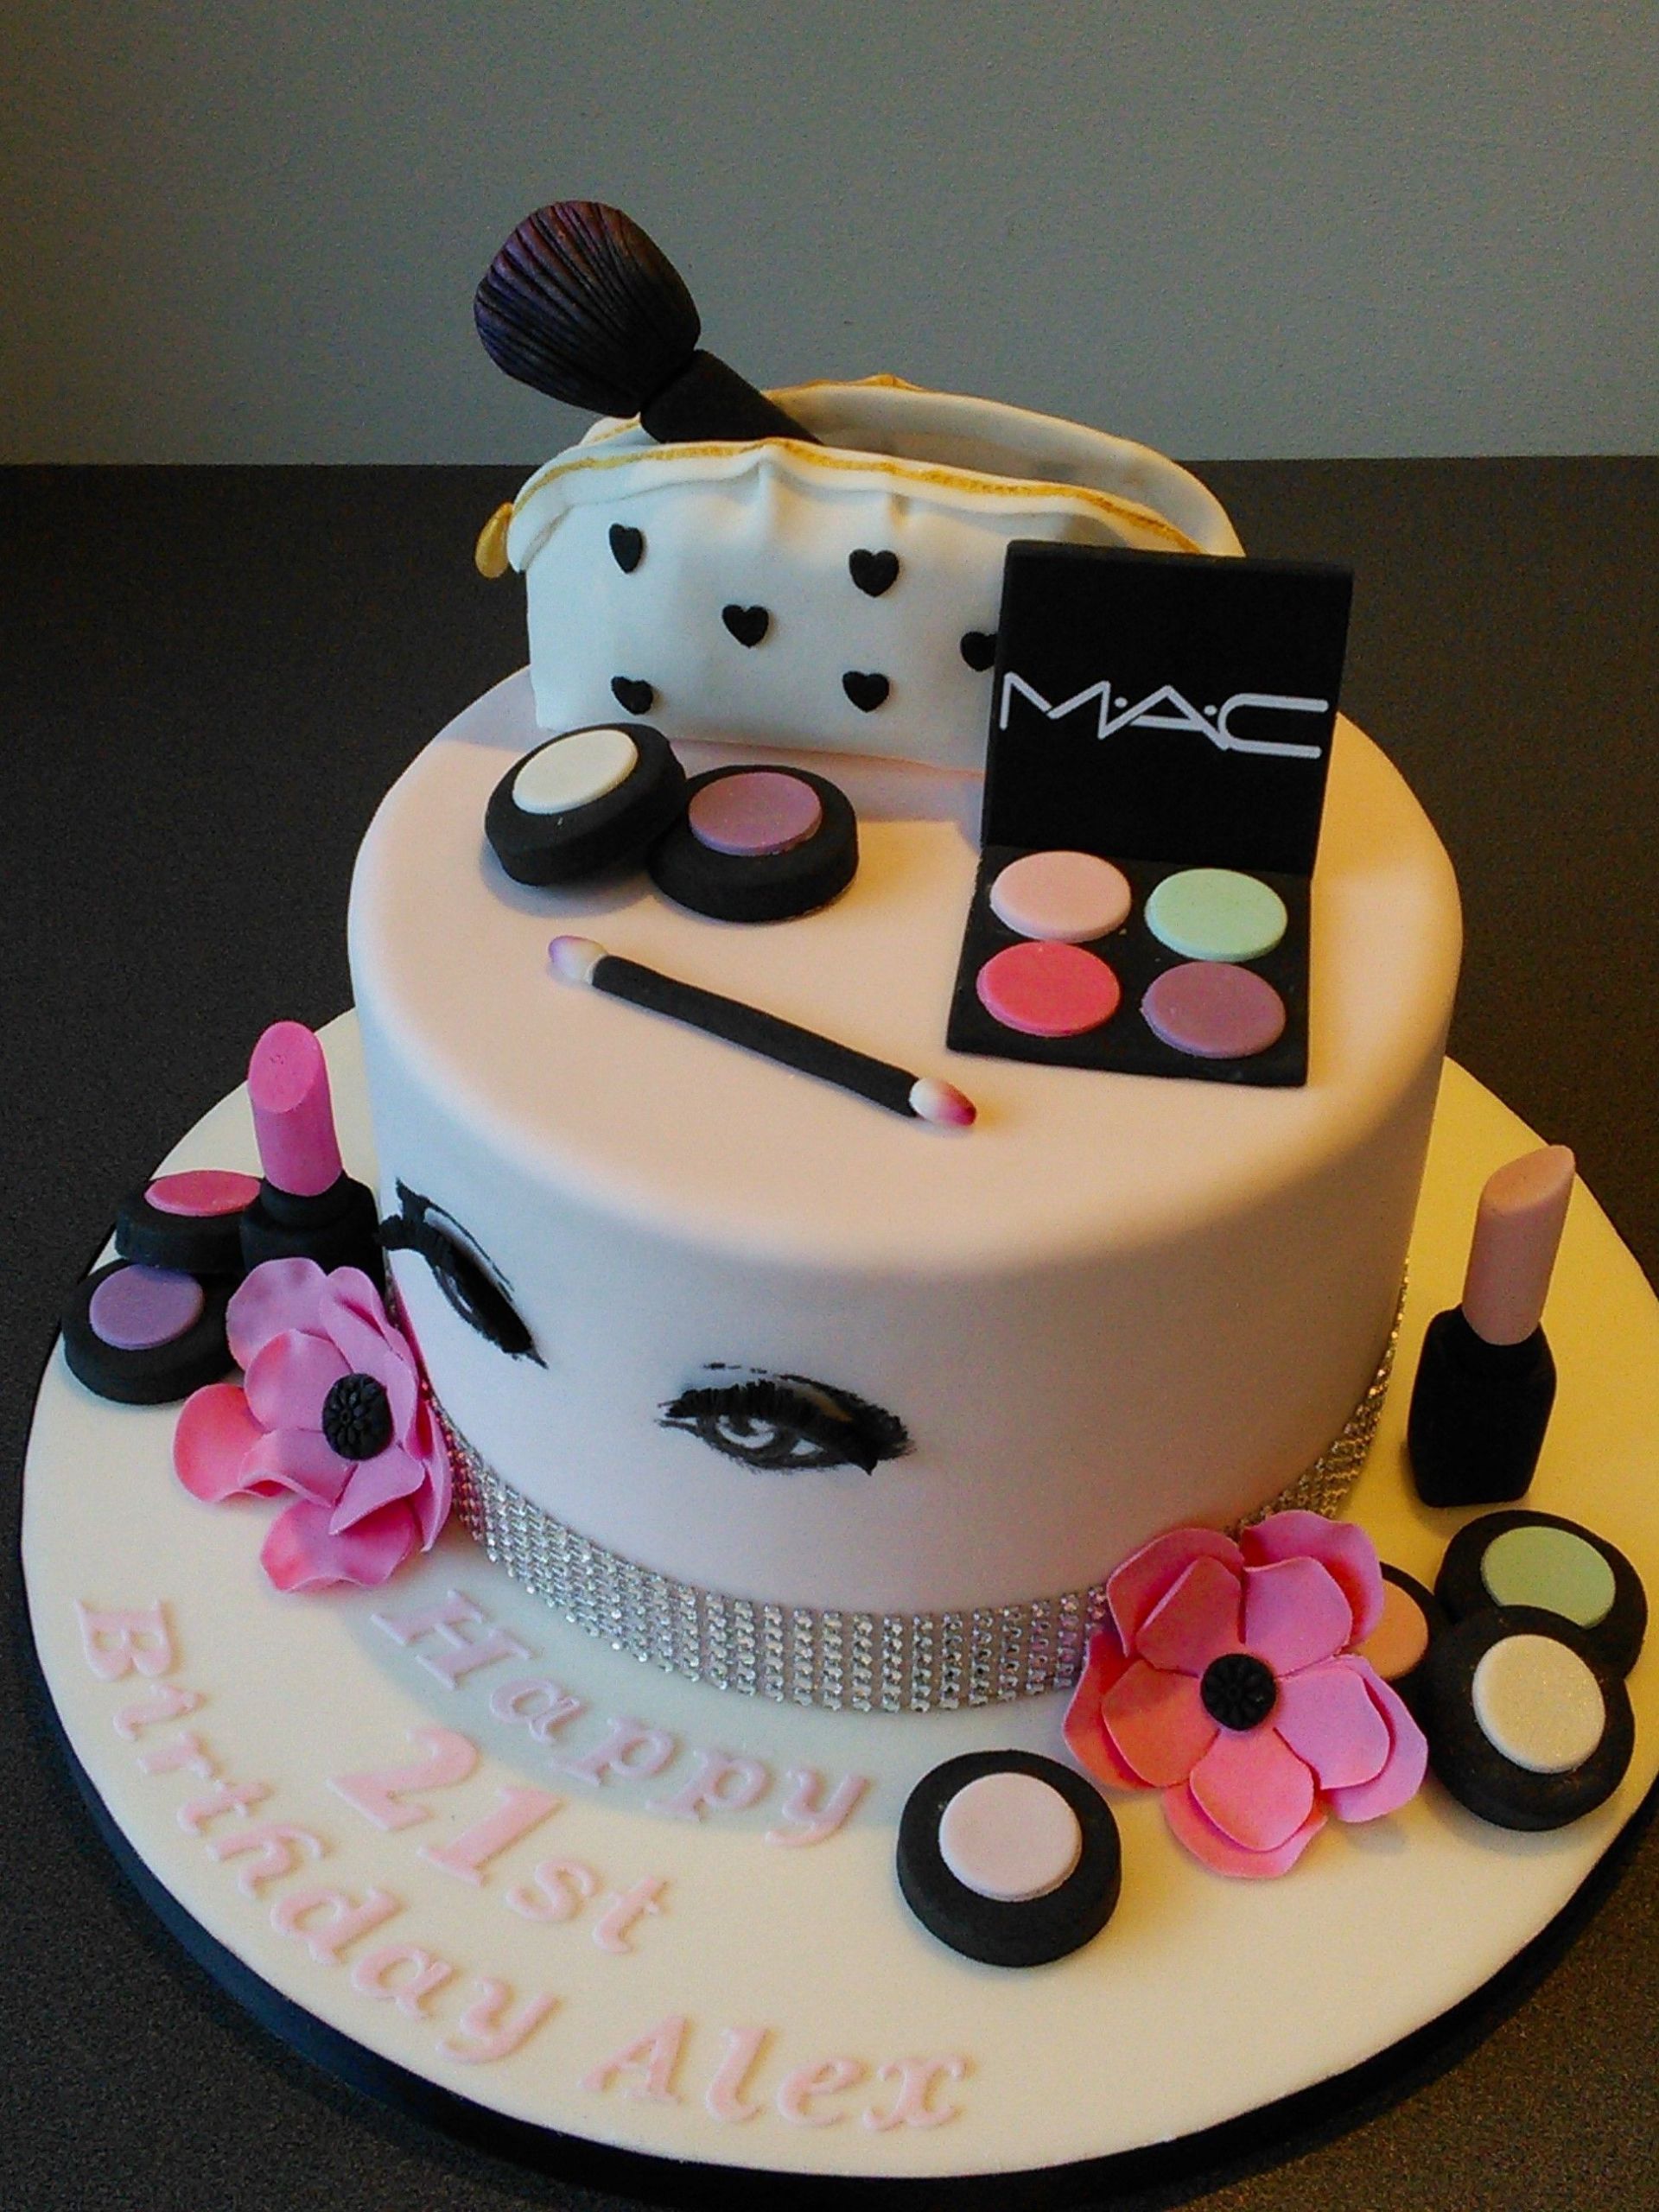 Makeup Birthday Cake
 Mac cosmetics 21st birthday cake make up bag with pink